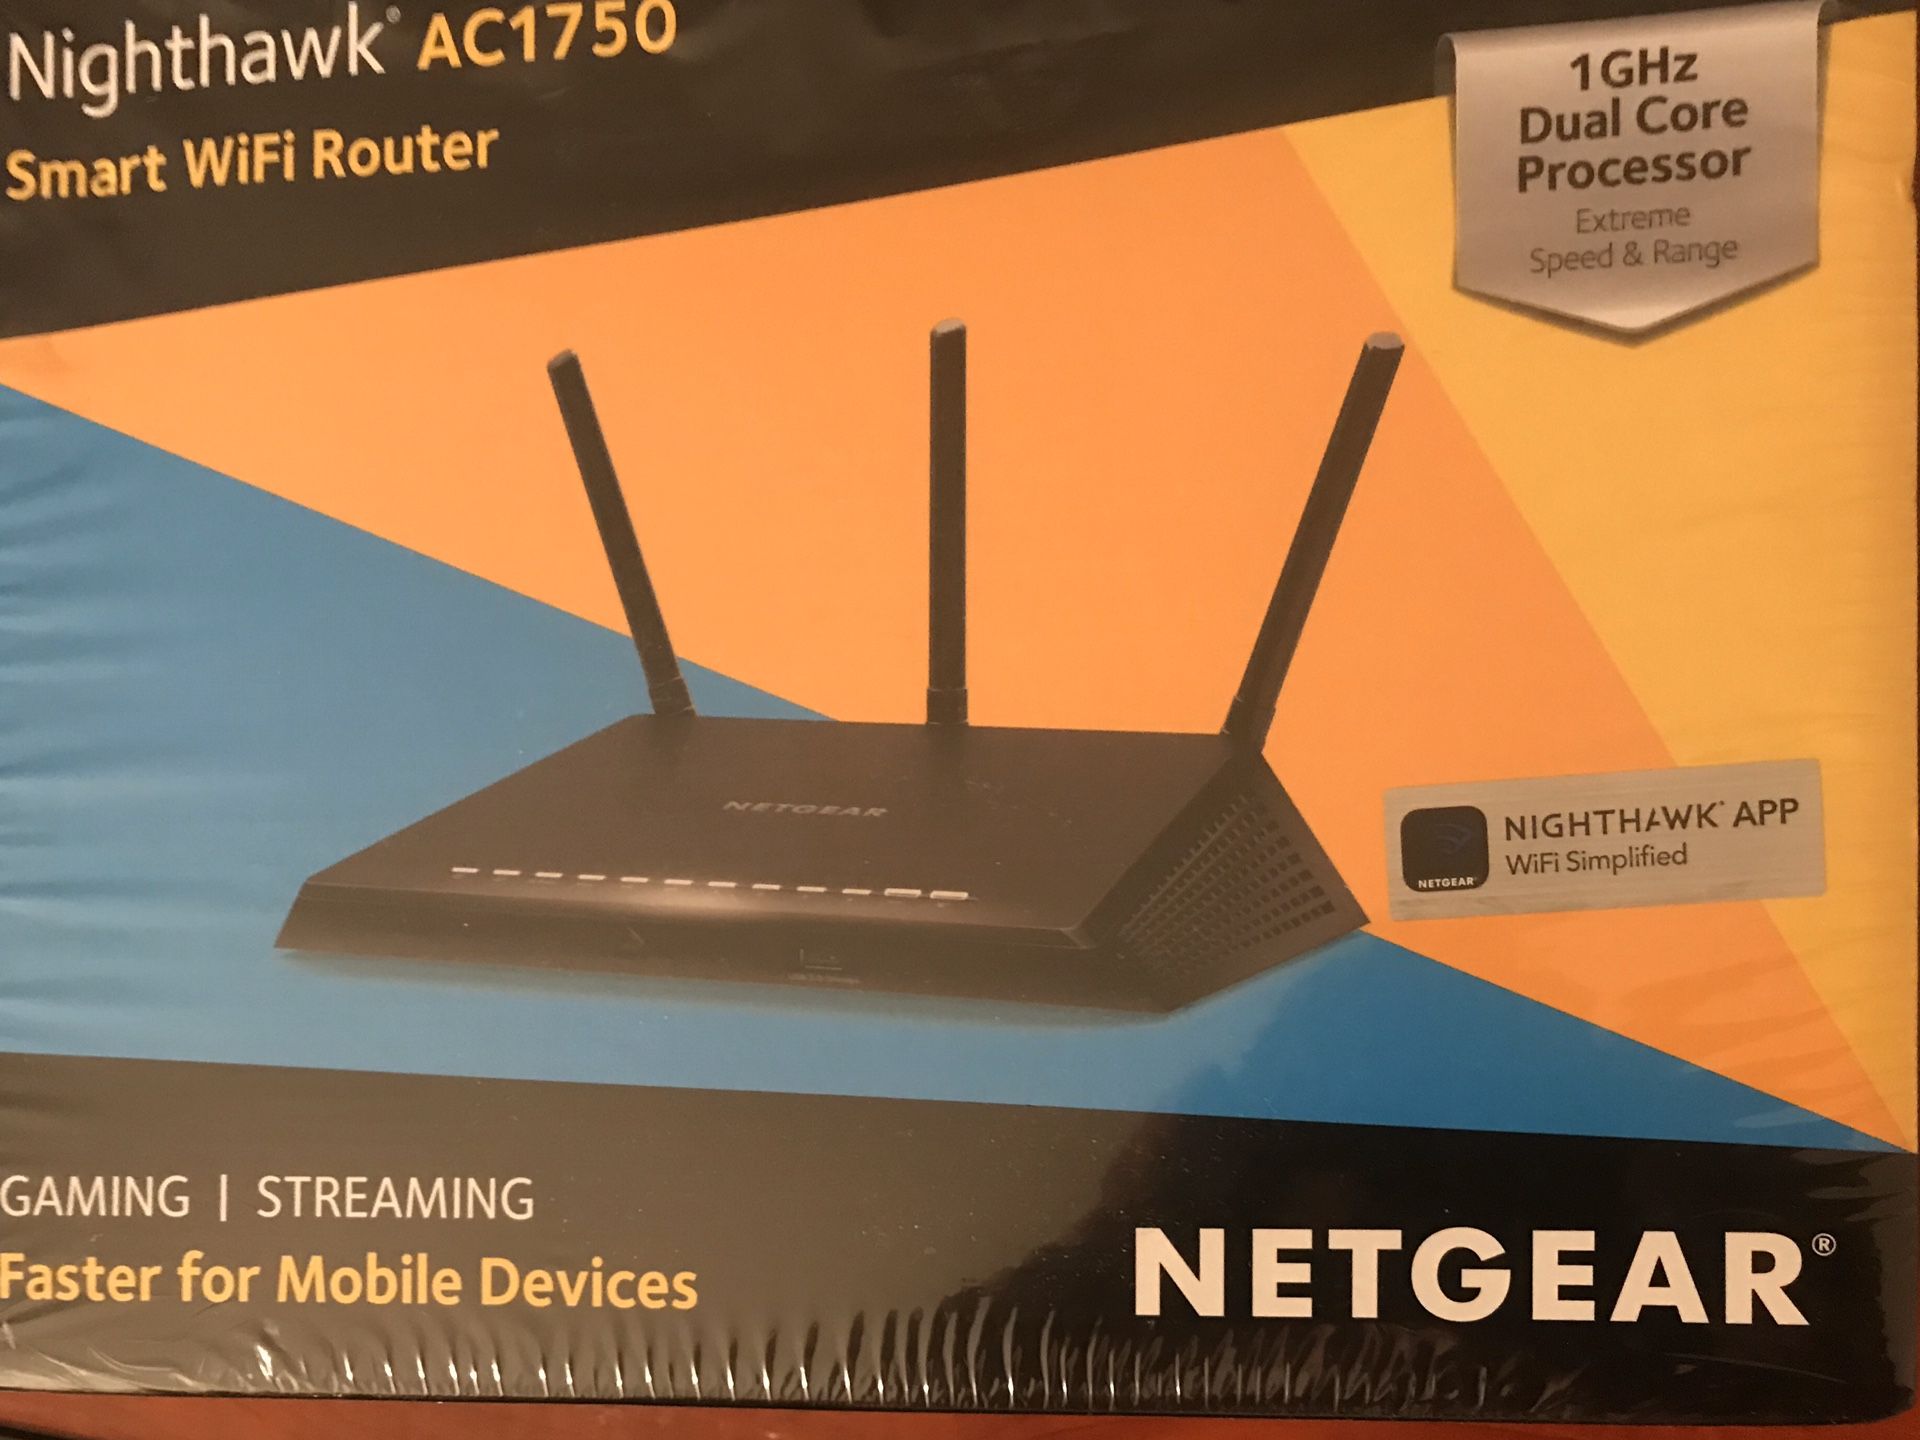 Netgear Nighthawk AC1750 Wireless Router